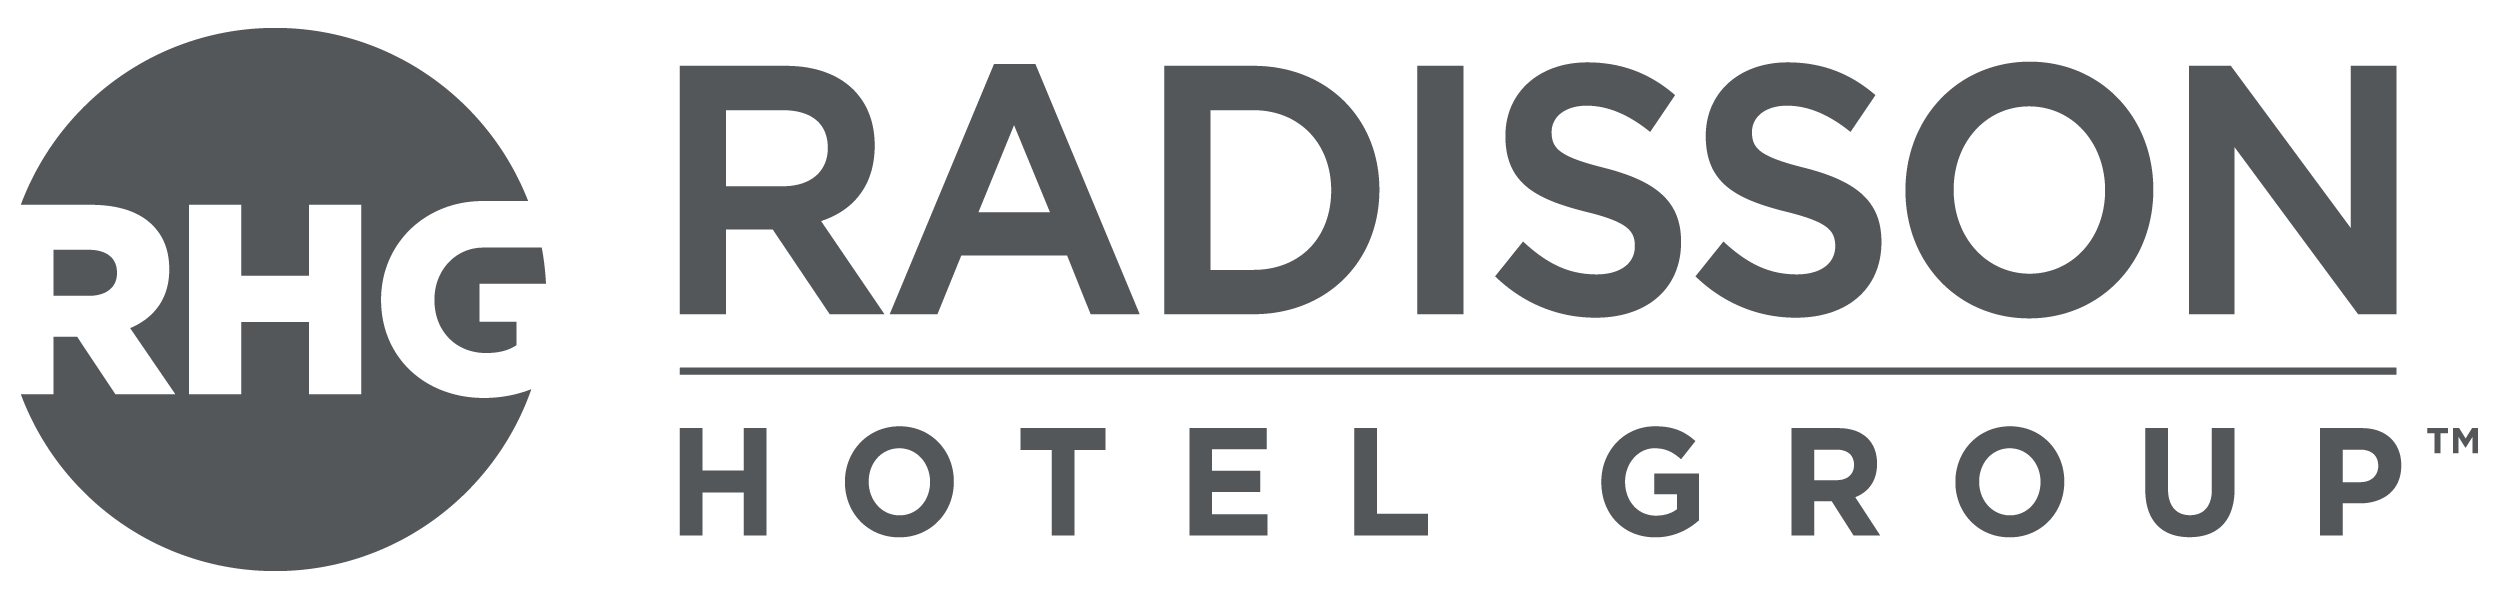 Radisson Logo - Flying Blue - Radisson Hotel Group